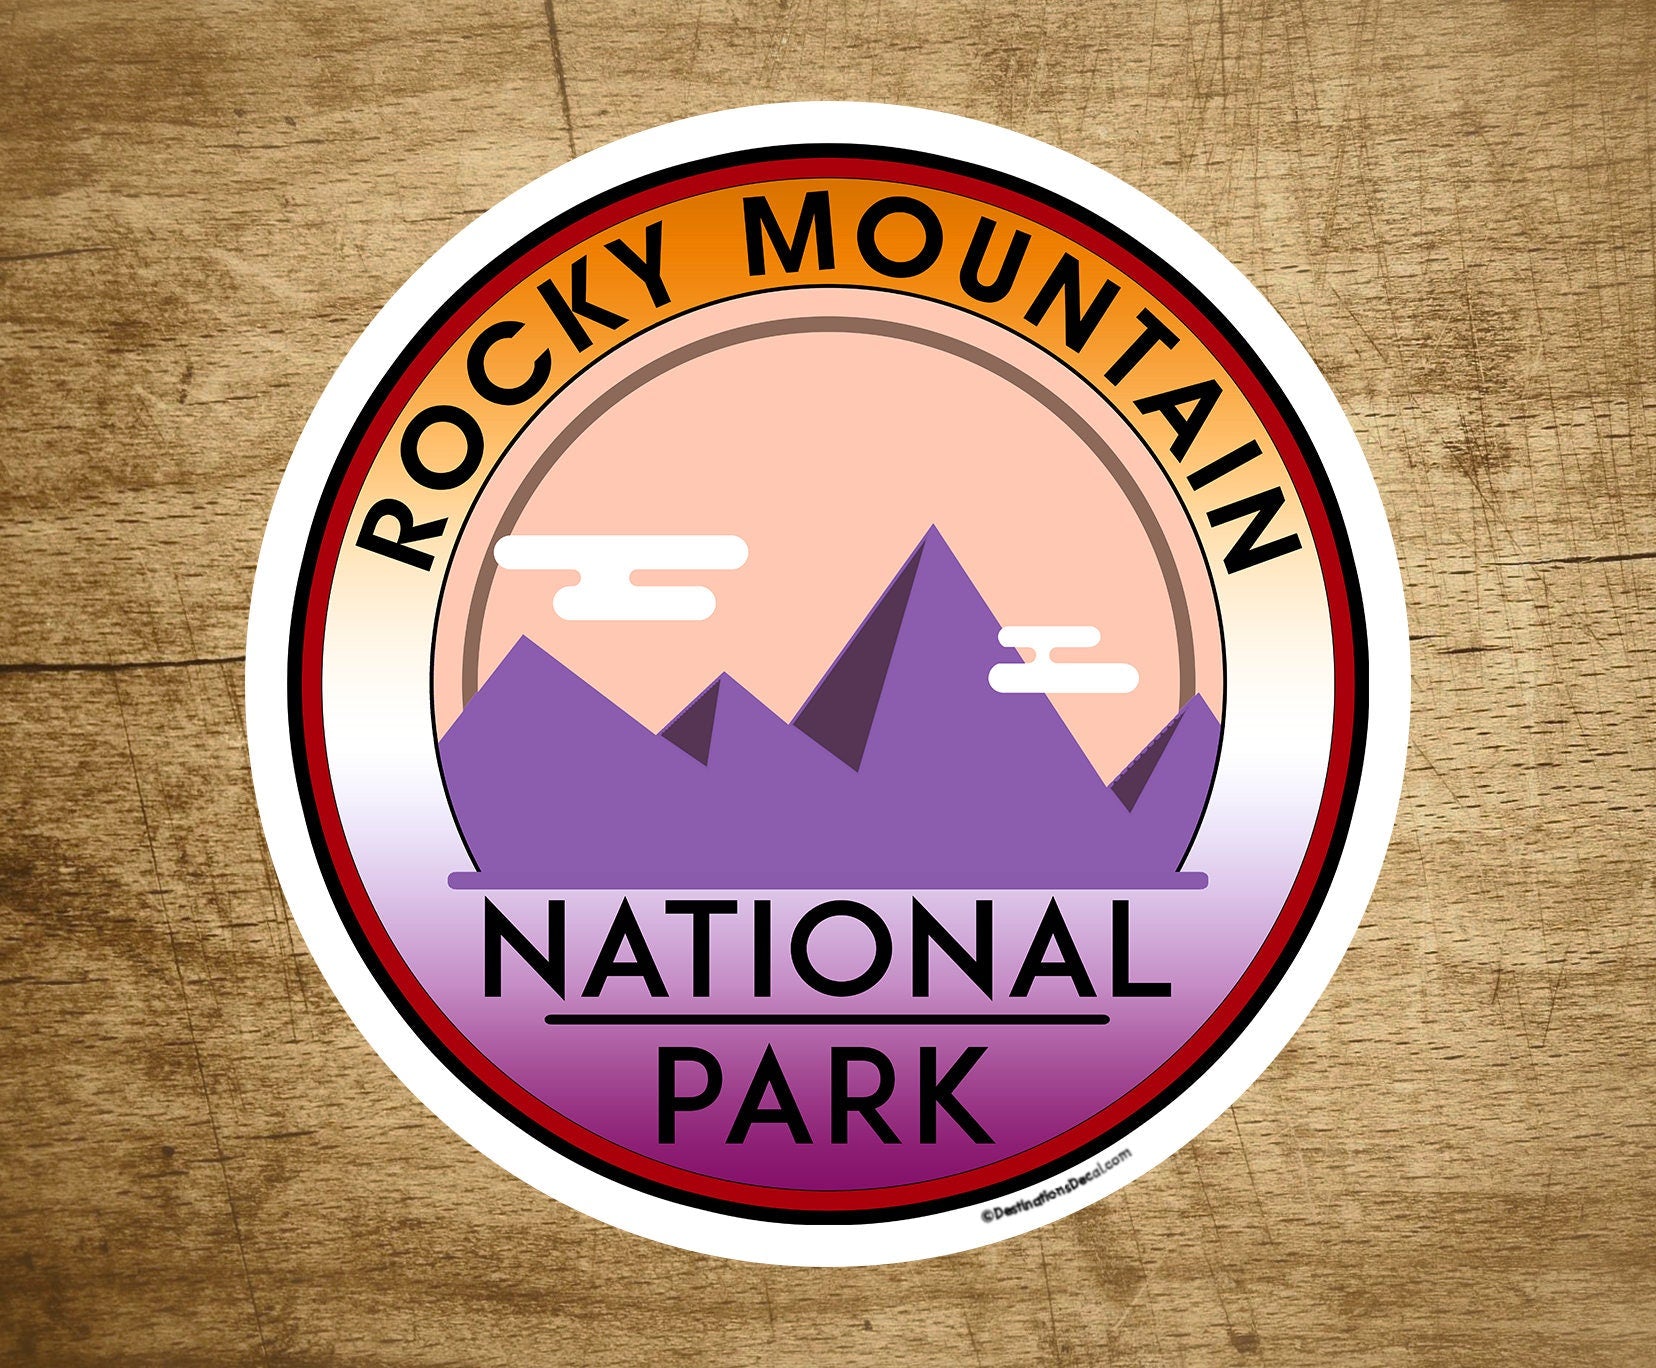 Rocky Mountain National Park 3" Sticker Decal Colorado Vinyl Indoor Outdoor